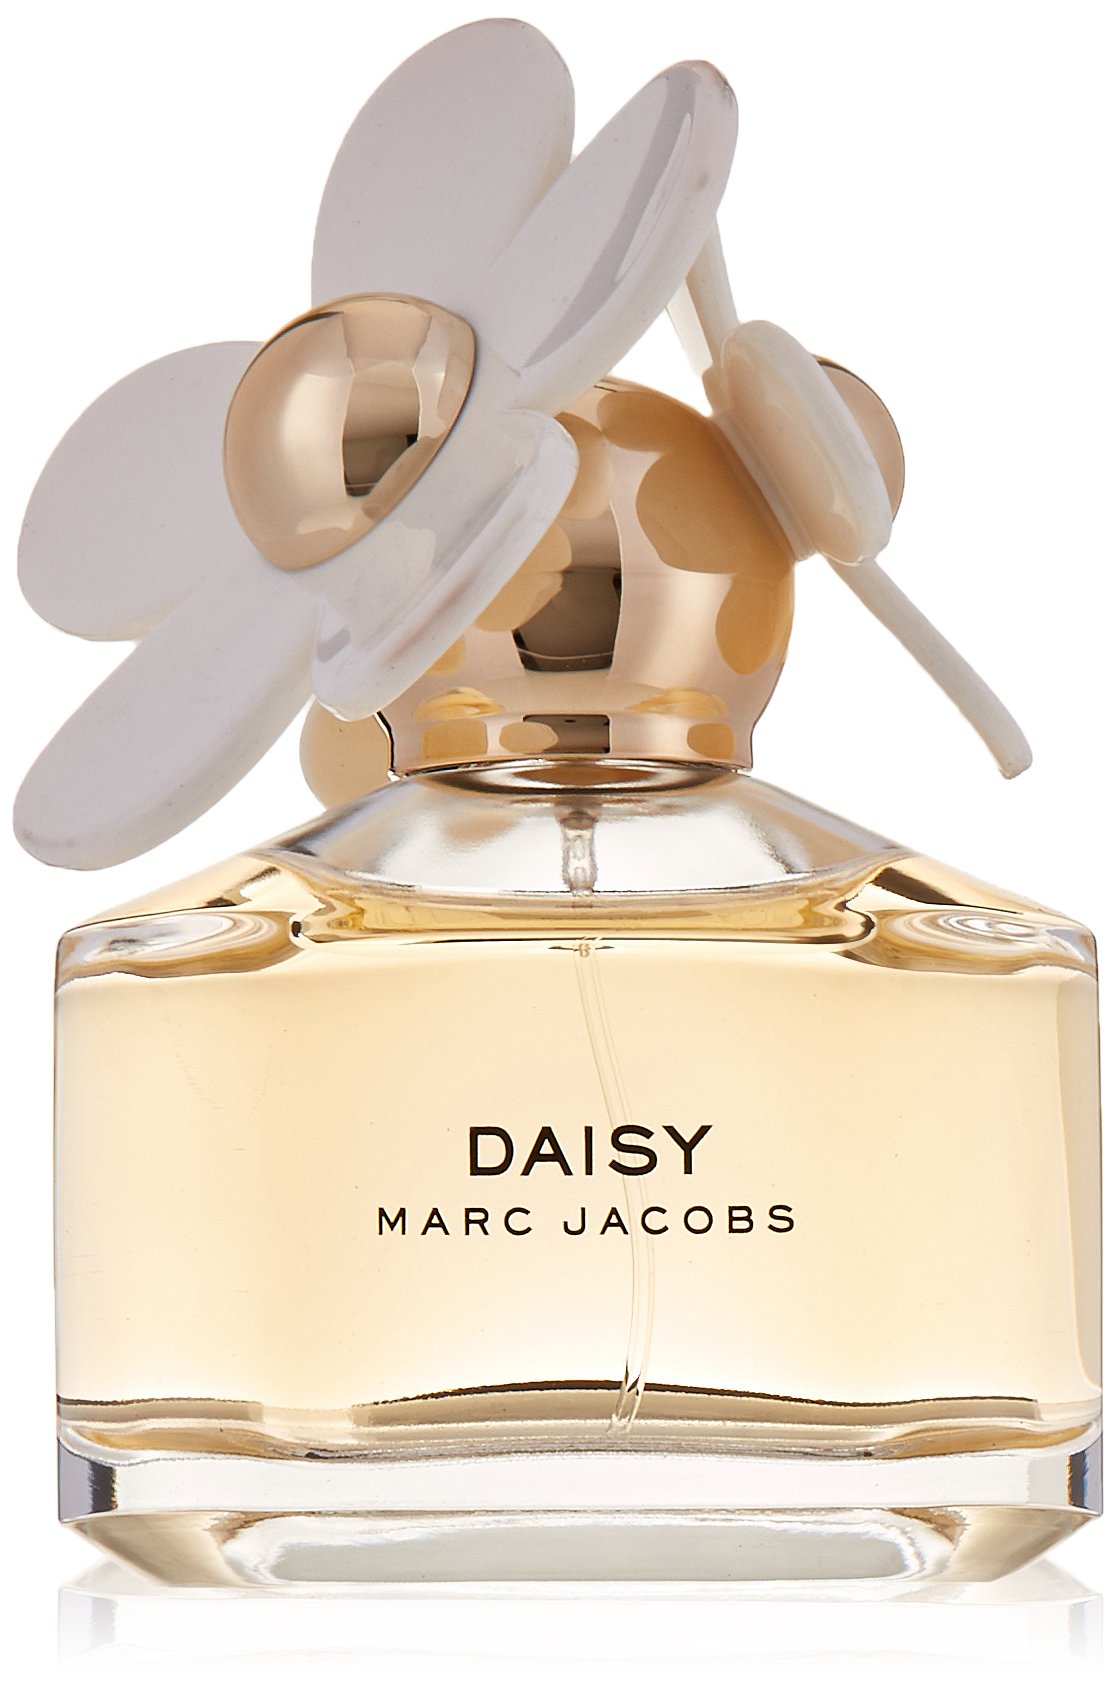 Daisy by Marc Jacobs 1.7 oz EDT spray Womens Perfume New 50 ml New in ...